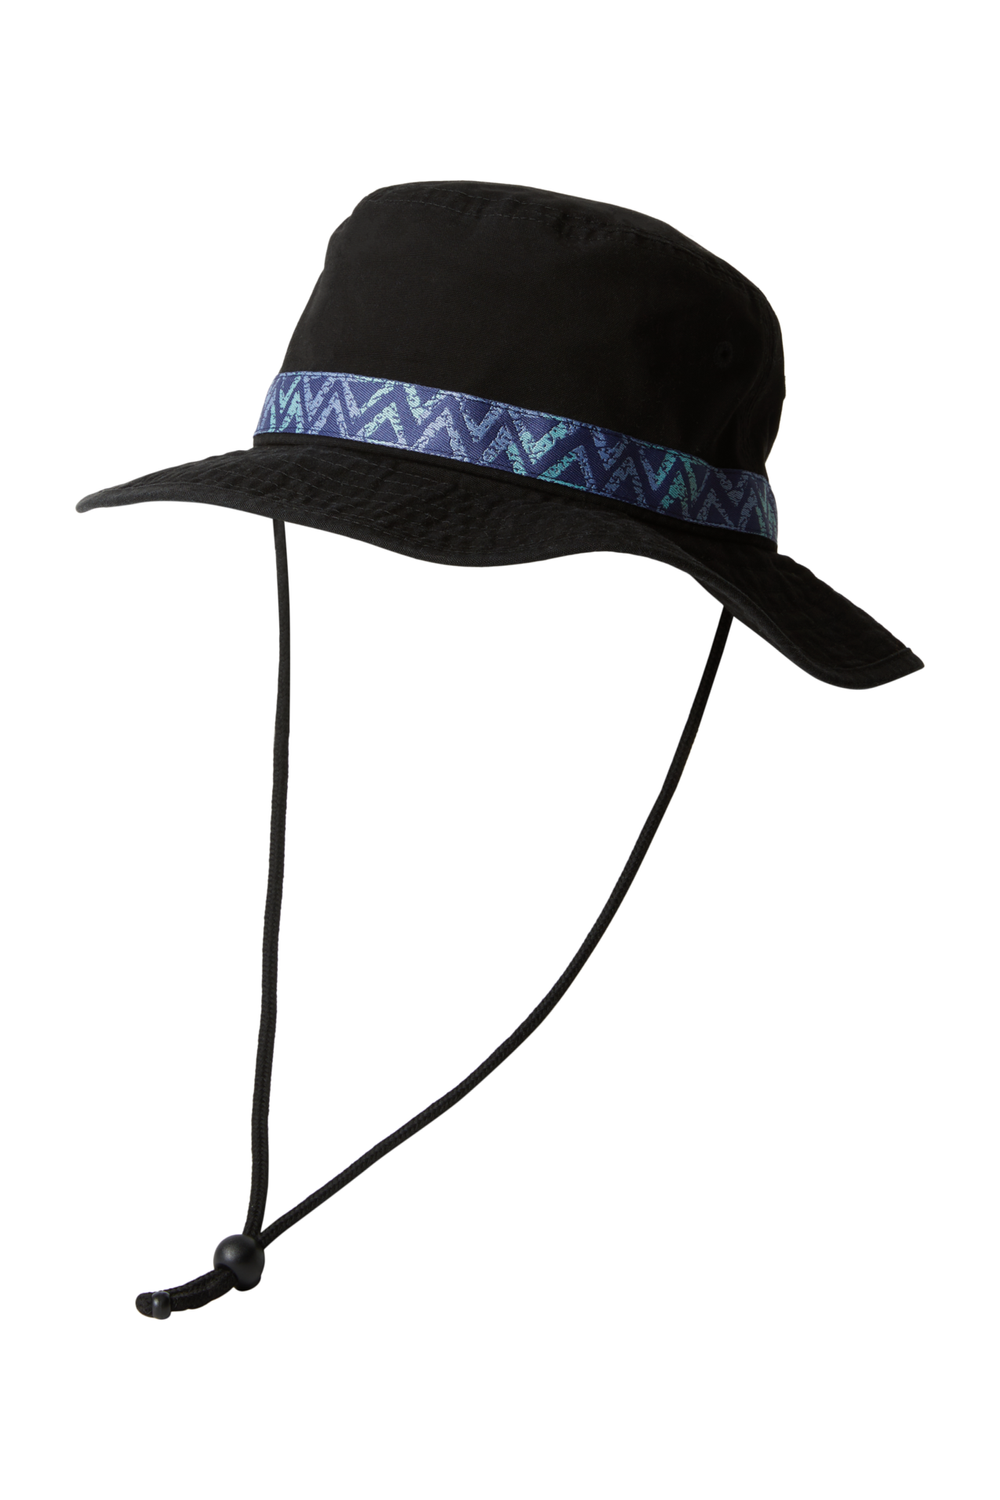 Quiksilver Take Us Back Bucket Hat Black